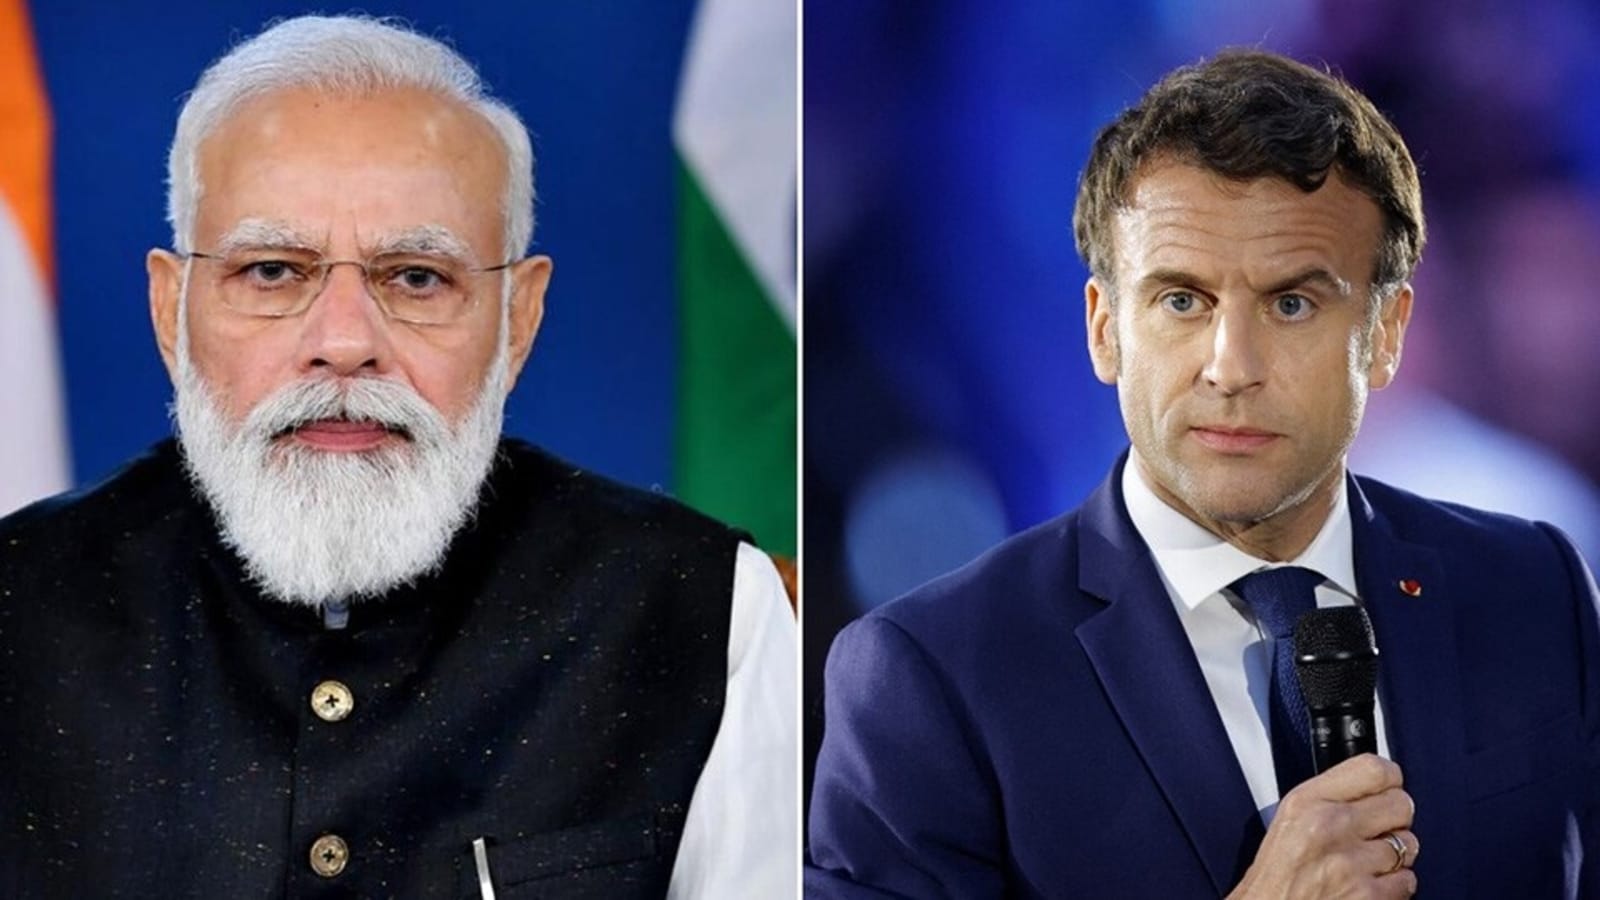 PM Modi to meet President Emmanuel Macron to cement India-France ties | Latest News India - Hindustan Times